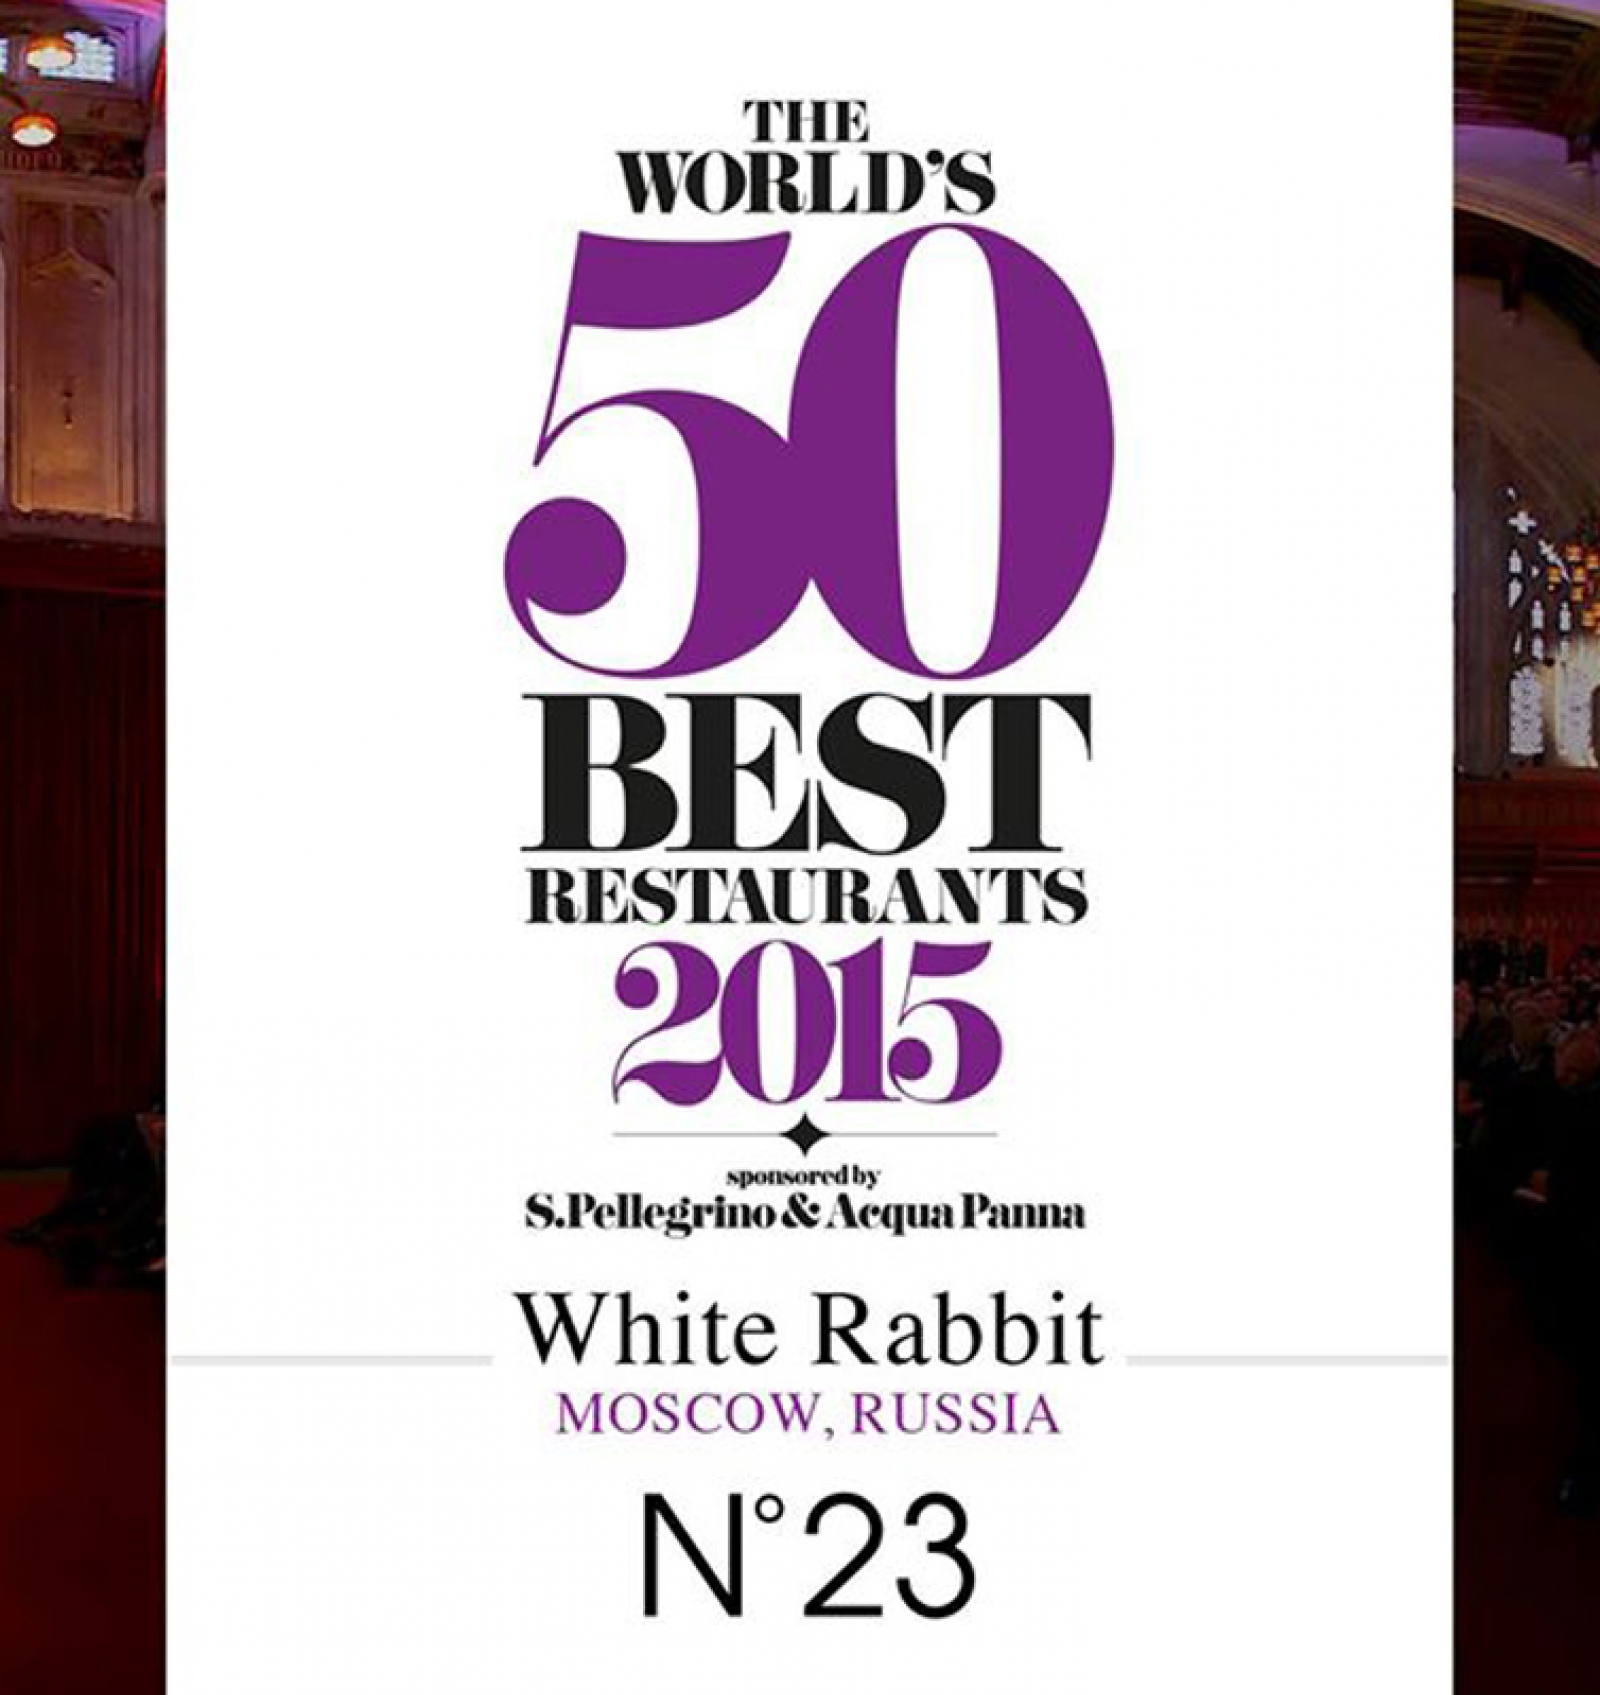 Ресторан White Rabbit: 23-е место в The World’s 50 Best Restaurants!